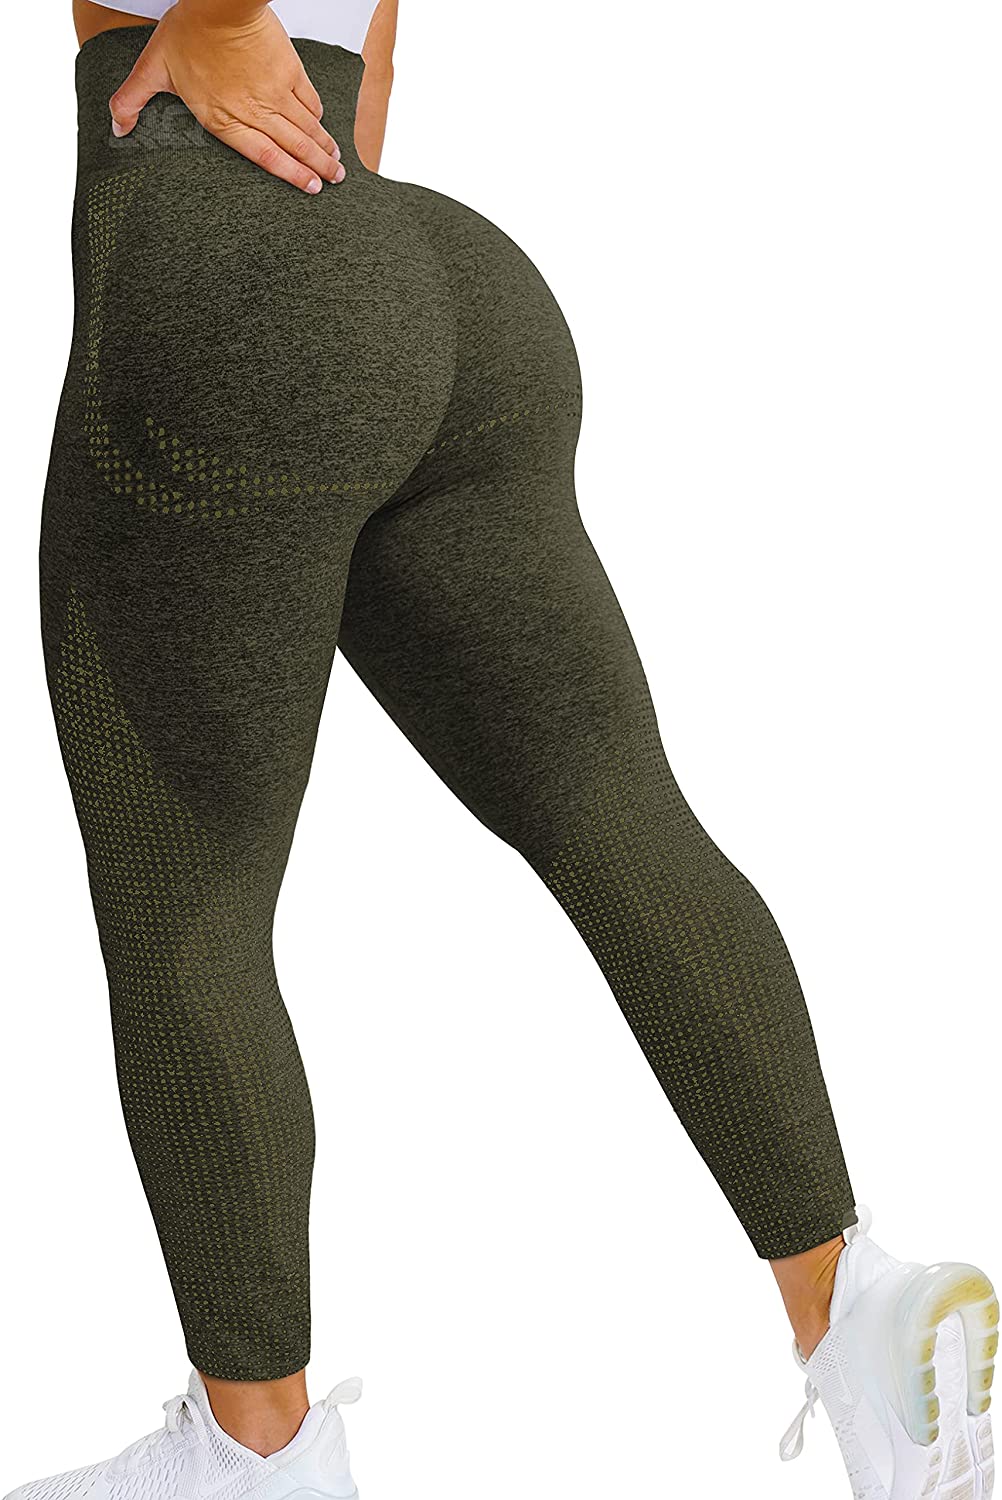 QRIC Women's High Waist Workout Vital Seamless Leggings Butt Lift Yoga  Pants Stretchy Fitness Gym Tights Dark Green, S